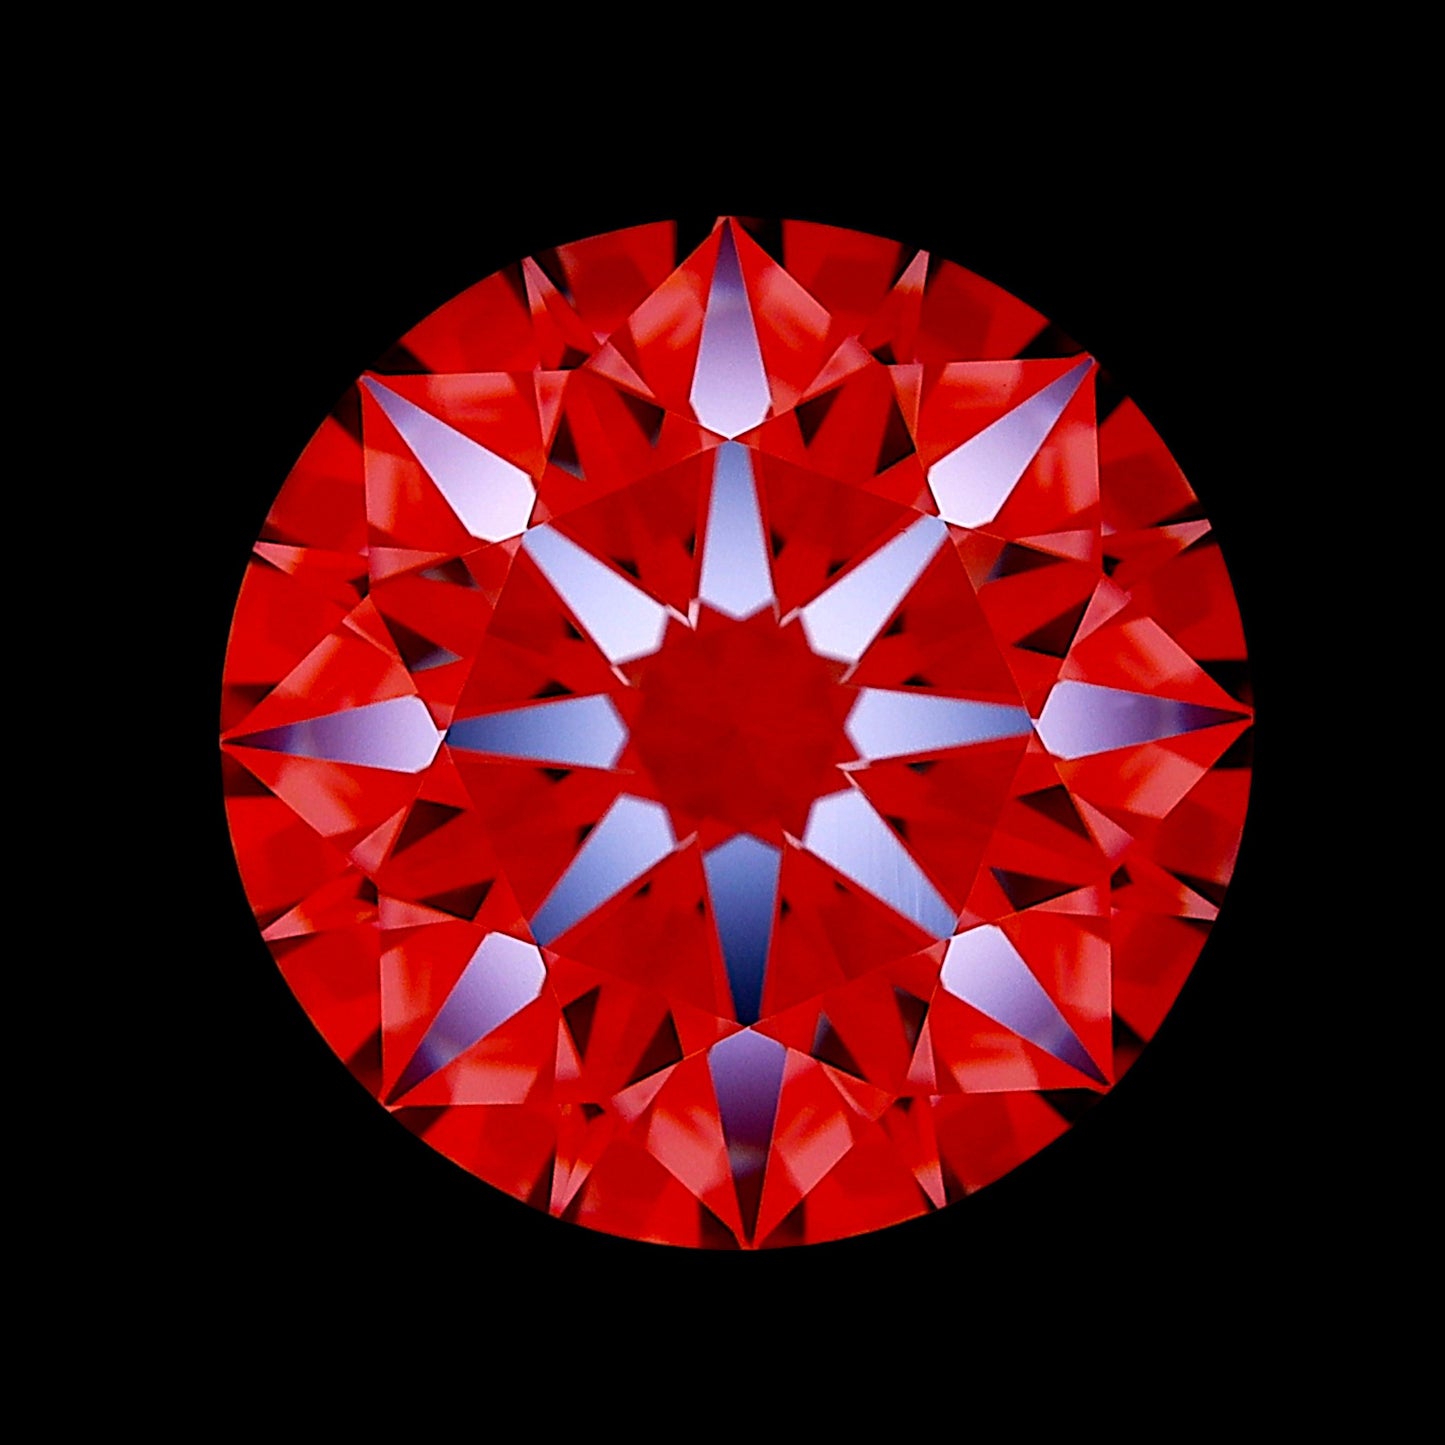 Magic 2.58-Carat Joyaux™ Signature Round Cut Diamond D FL - The Pinnacle of Purity and Flawless